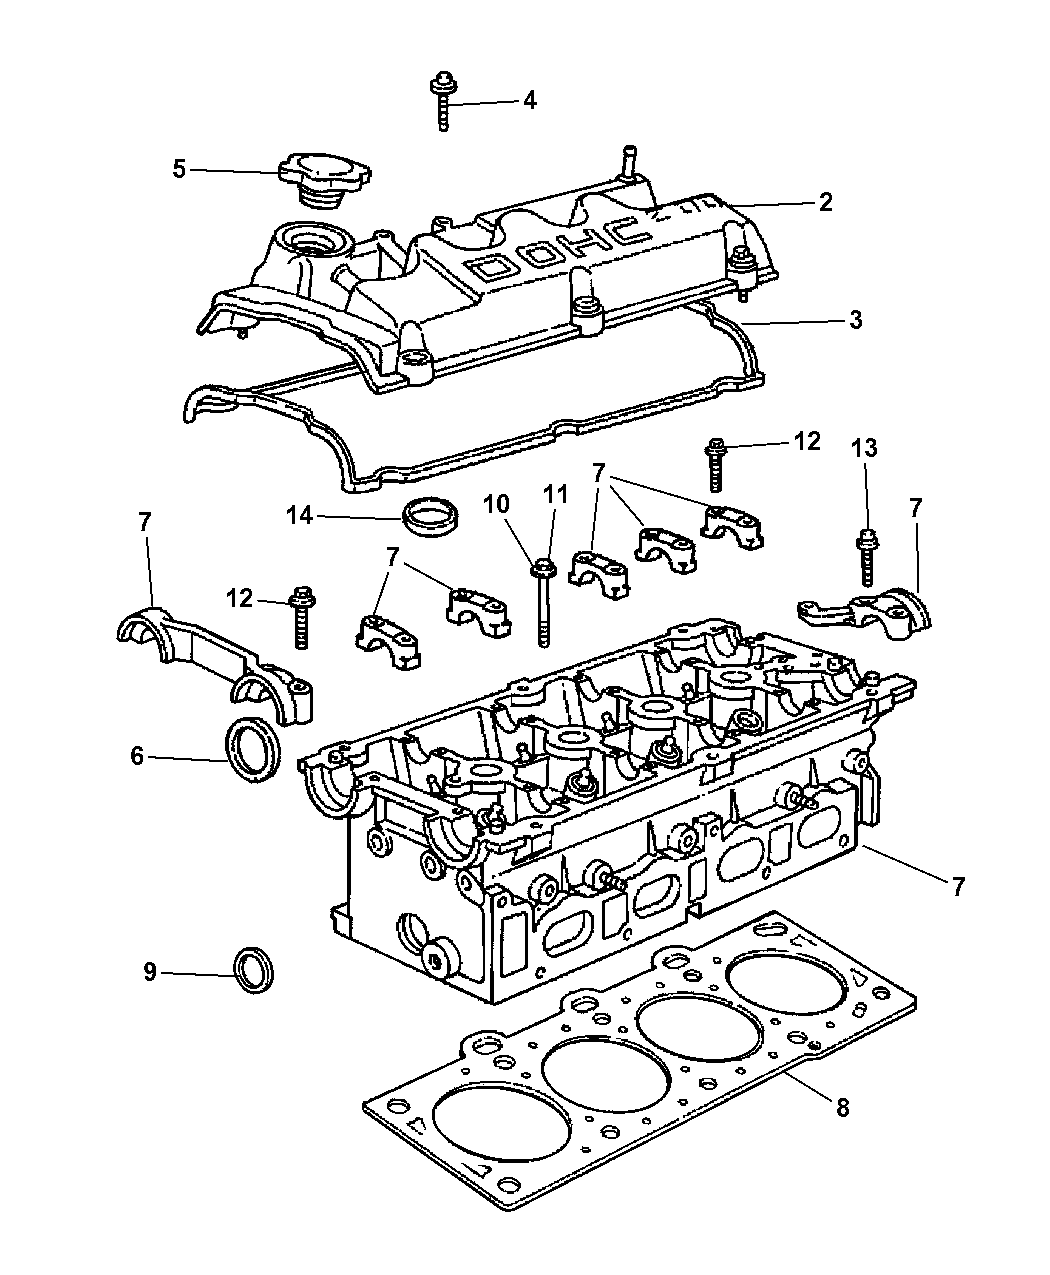 2006 Chrysler Sebring Engine Diagram - Cars Wiring Diagram